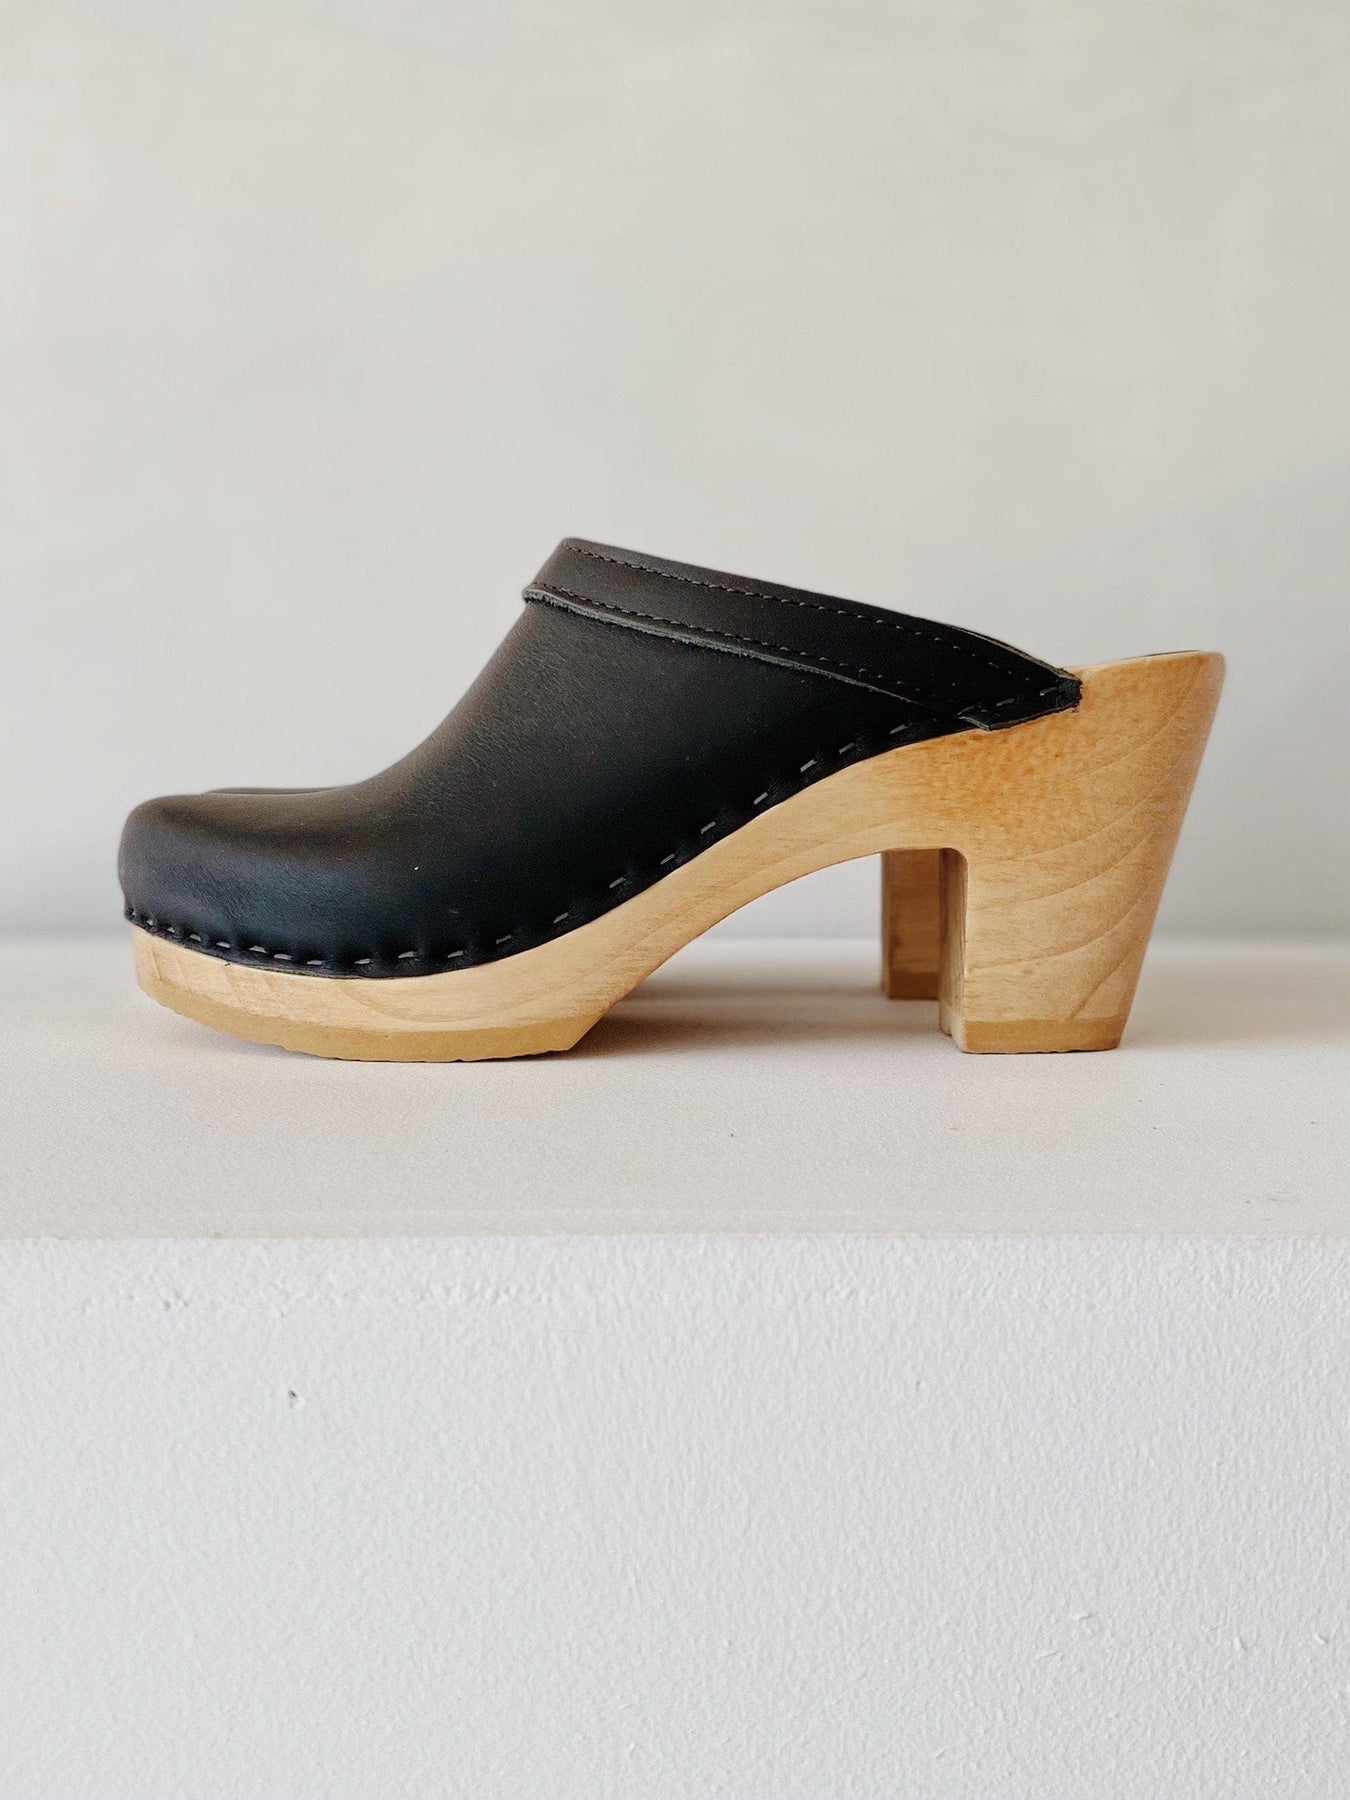 no. 6 old school clog on high heel in black – mabo